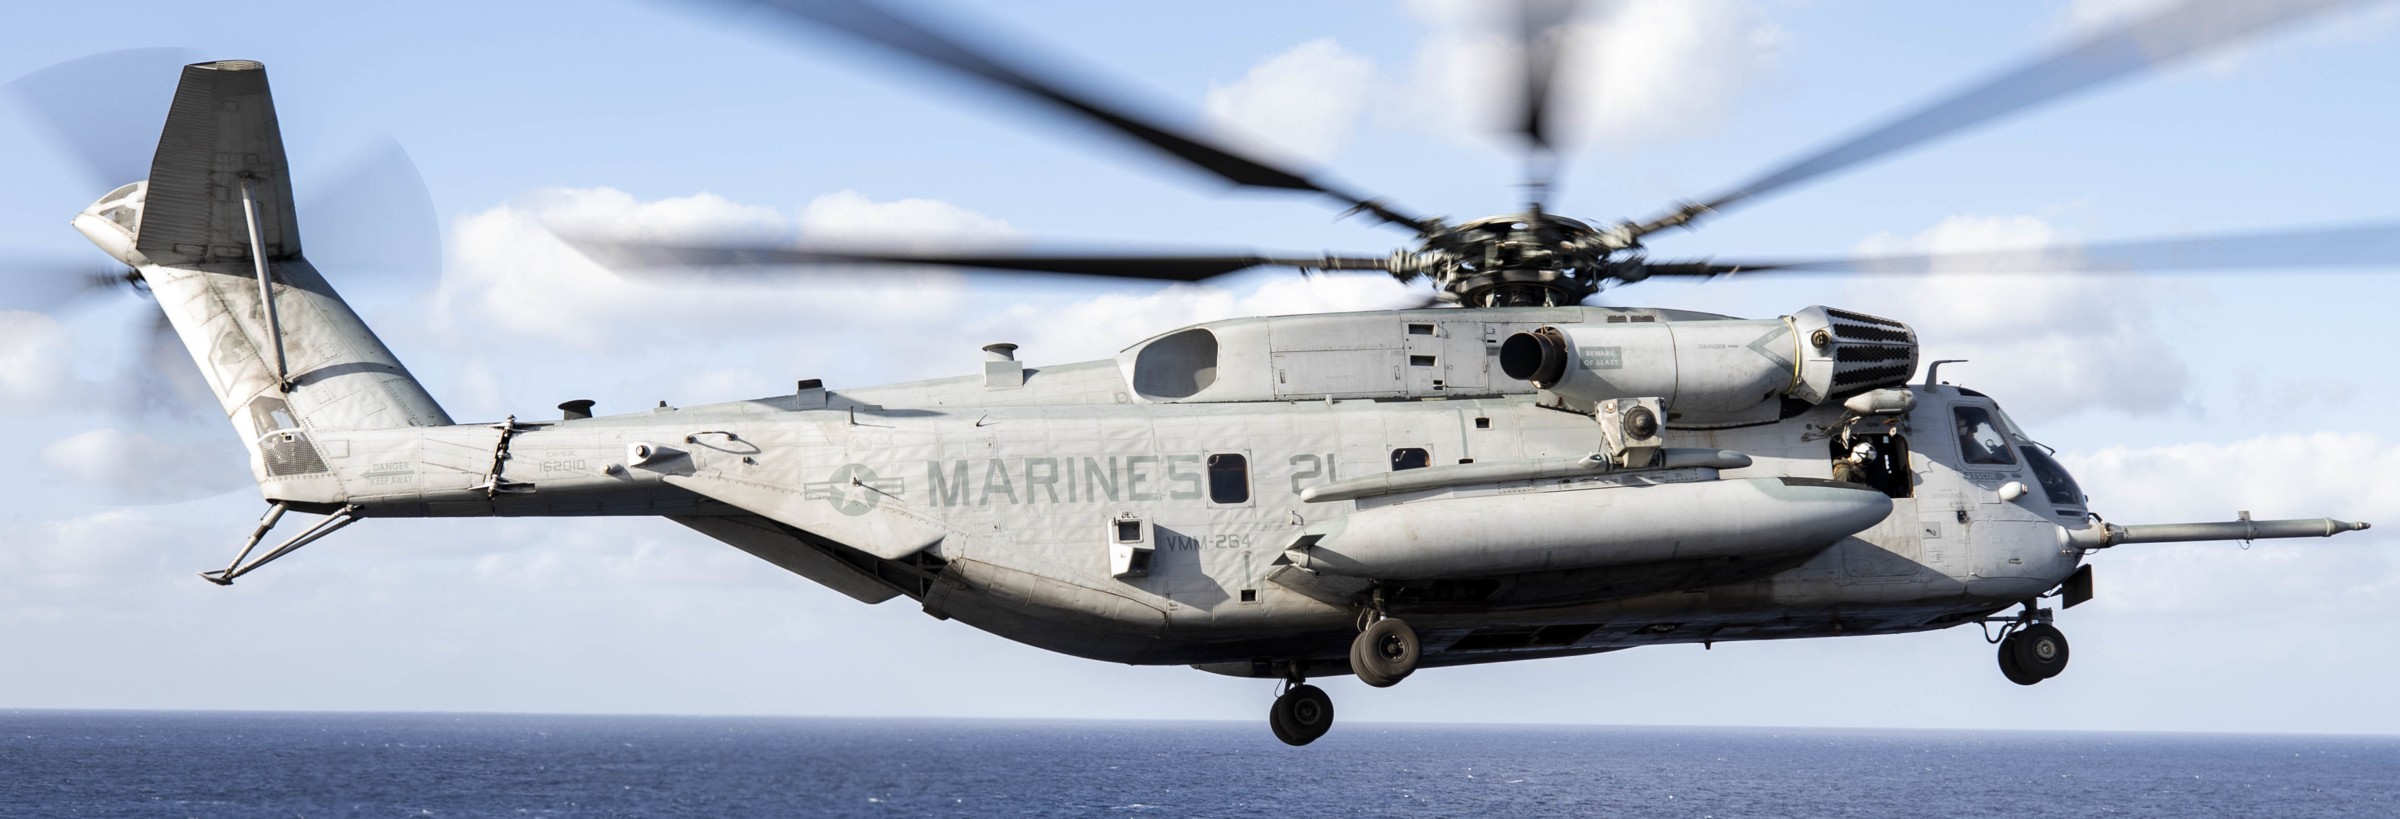 hmh-366 hammerheads ch-53e super stallion marine heavy helicopter squadron usmc 140